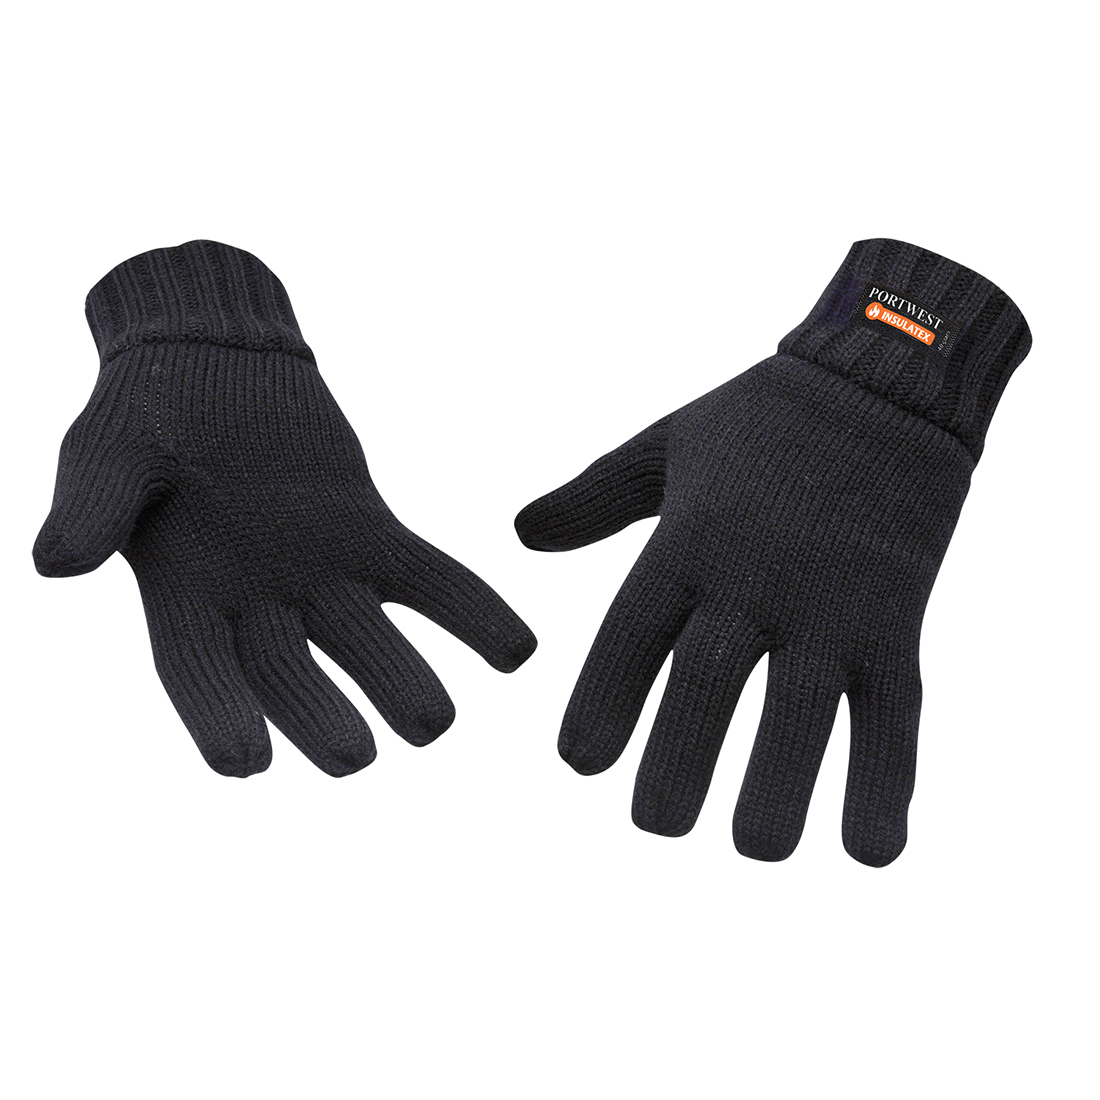 Portwest GL13 - Knit Glove Insulatex Lined